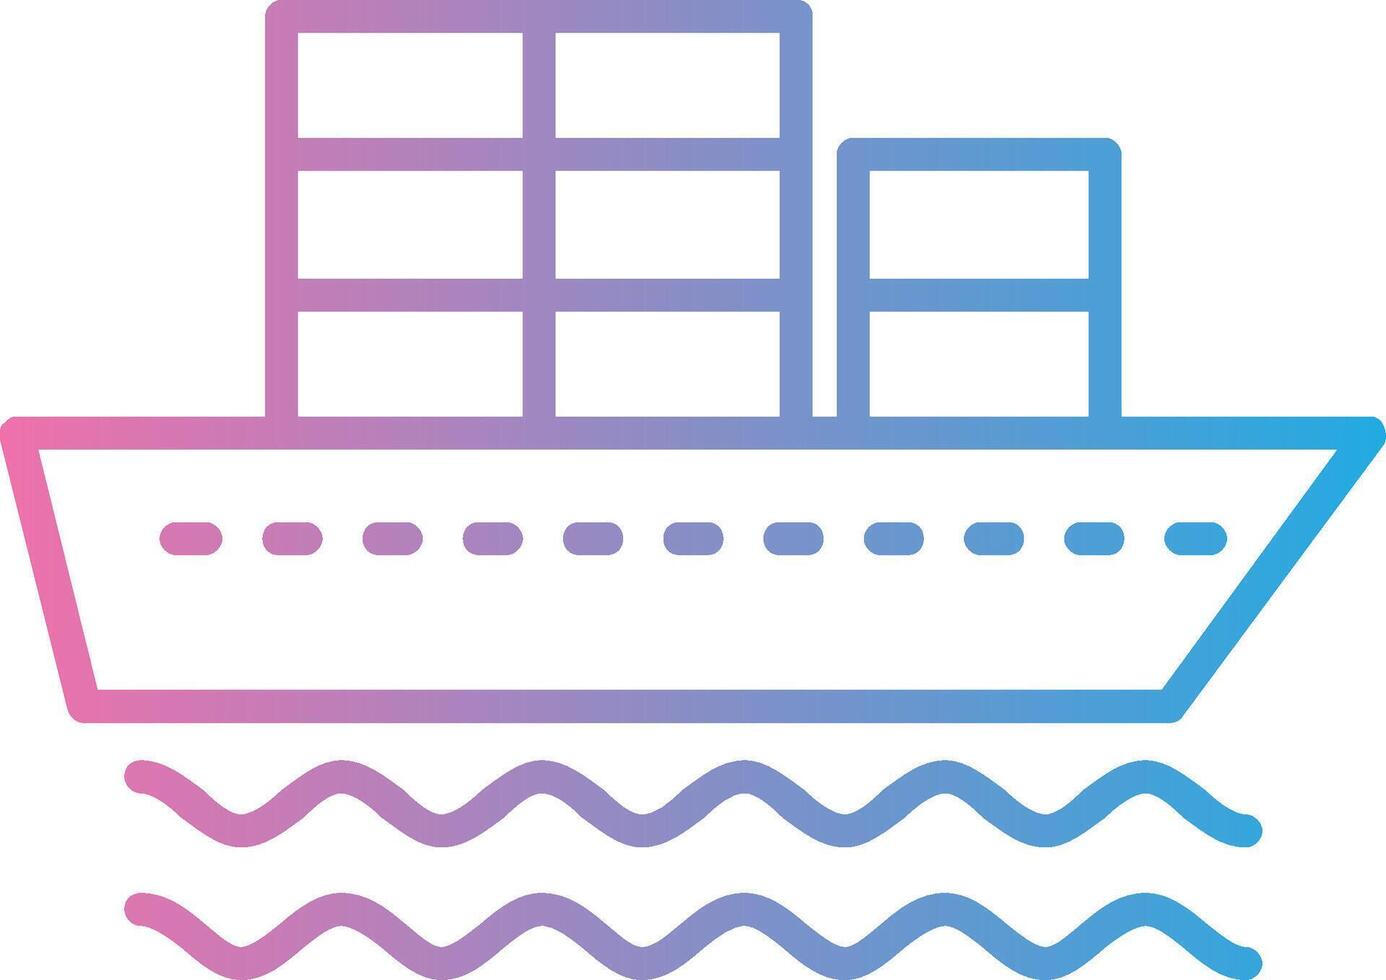 Container Ship Line Gradient Icon Design vector